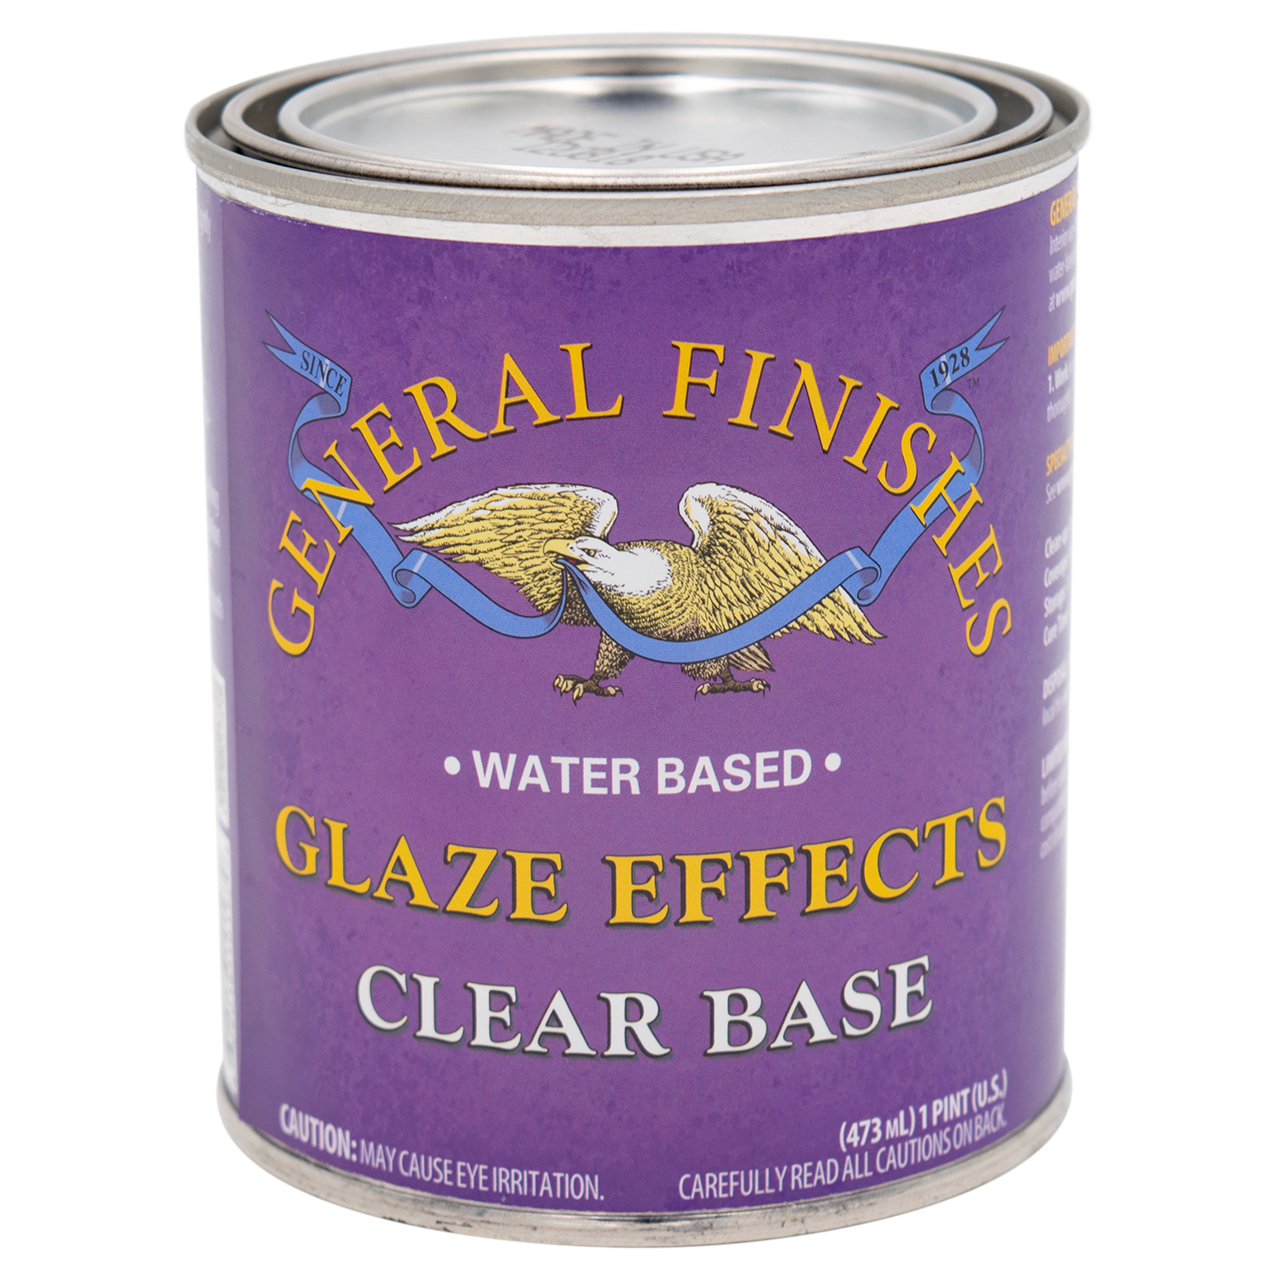 General Finish Glaze Effects